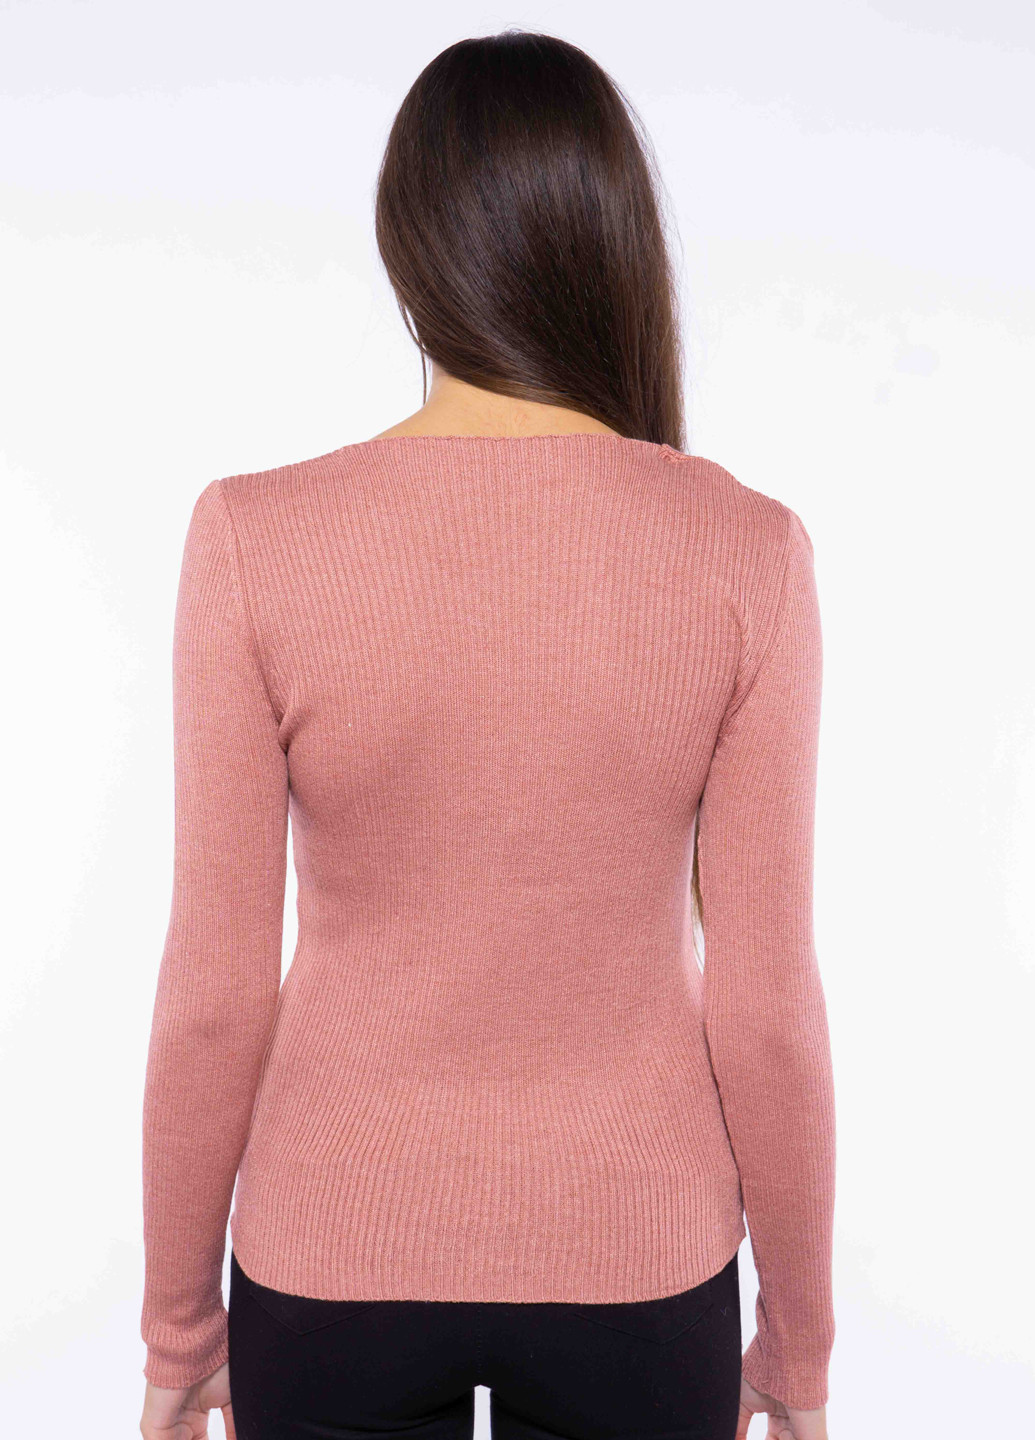 Розово-коричневый демисезонный пуловер пуловер Time of Style